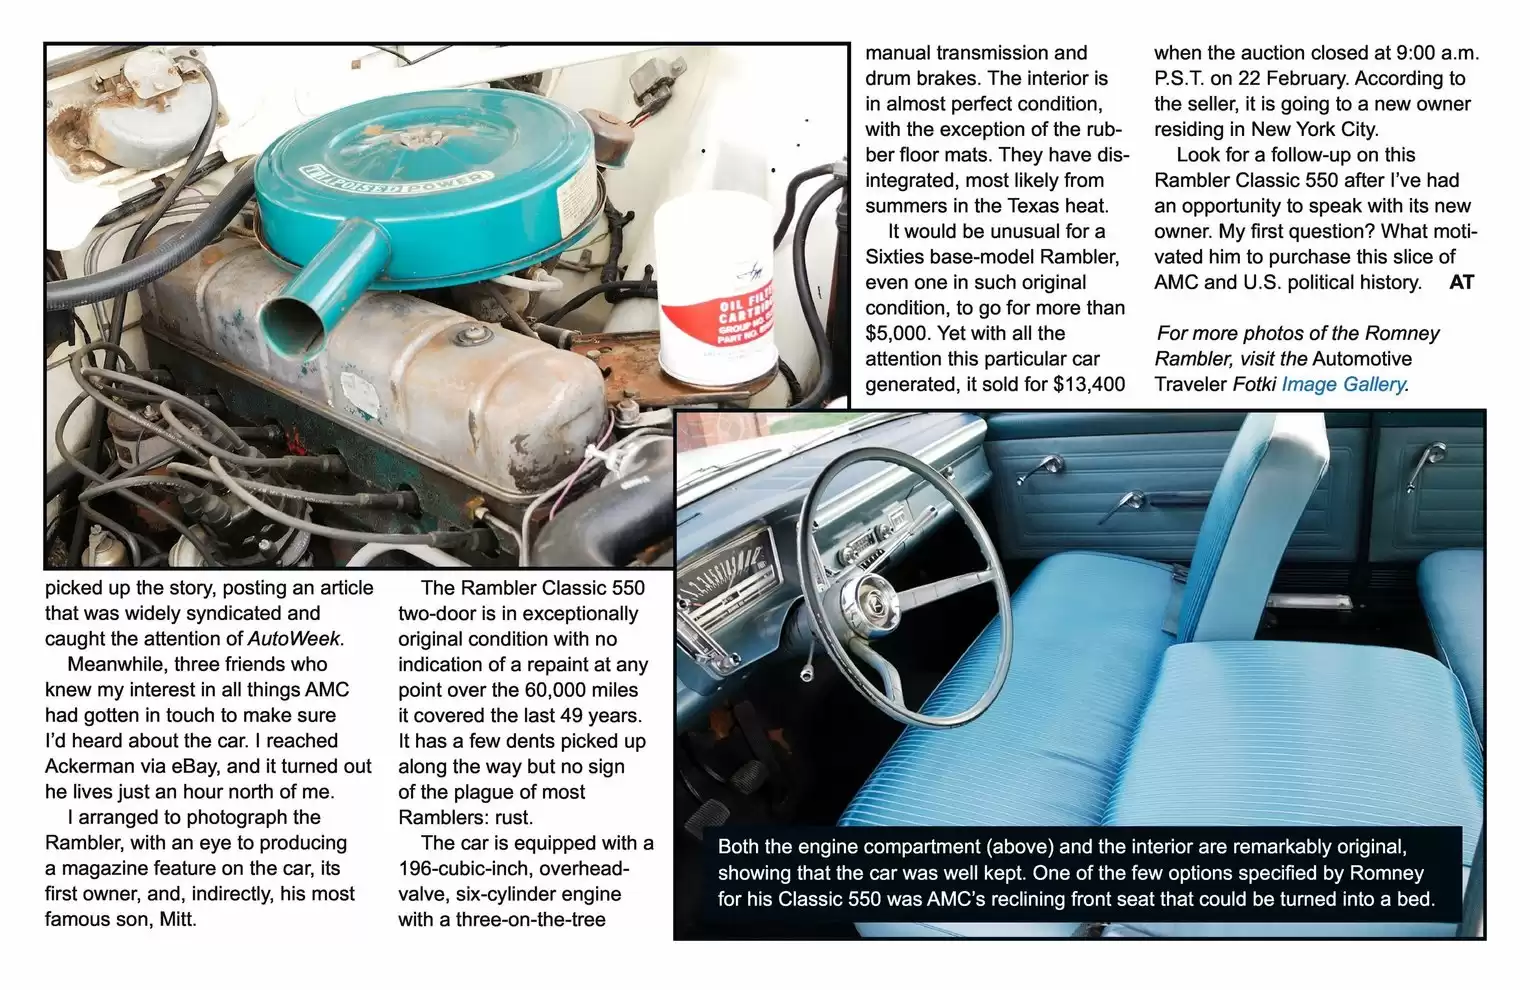 Automotive Traveler Magazine: 2013 02 Romney Rambler Page 4